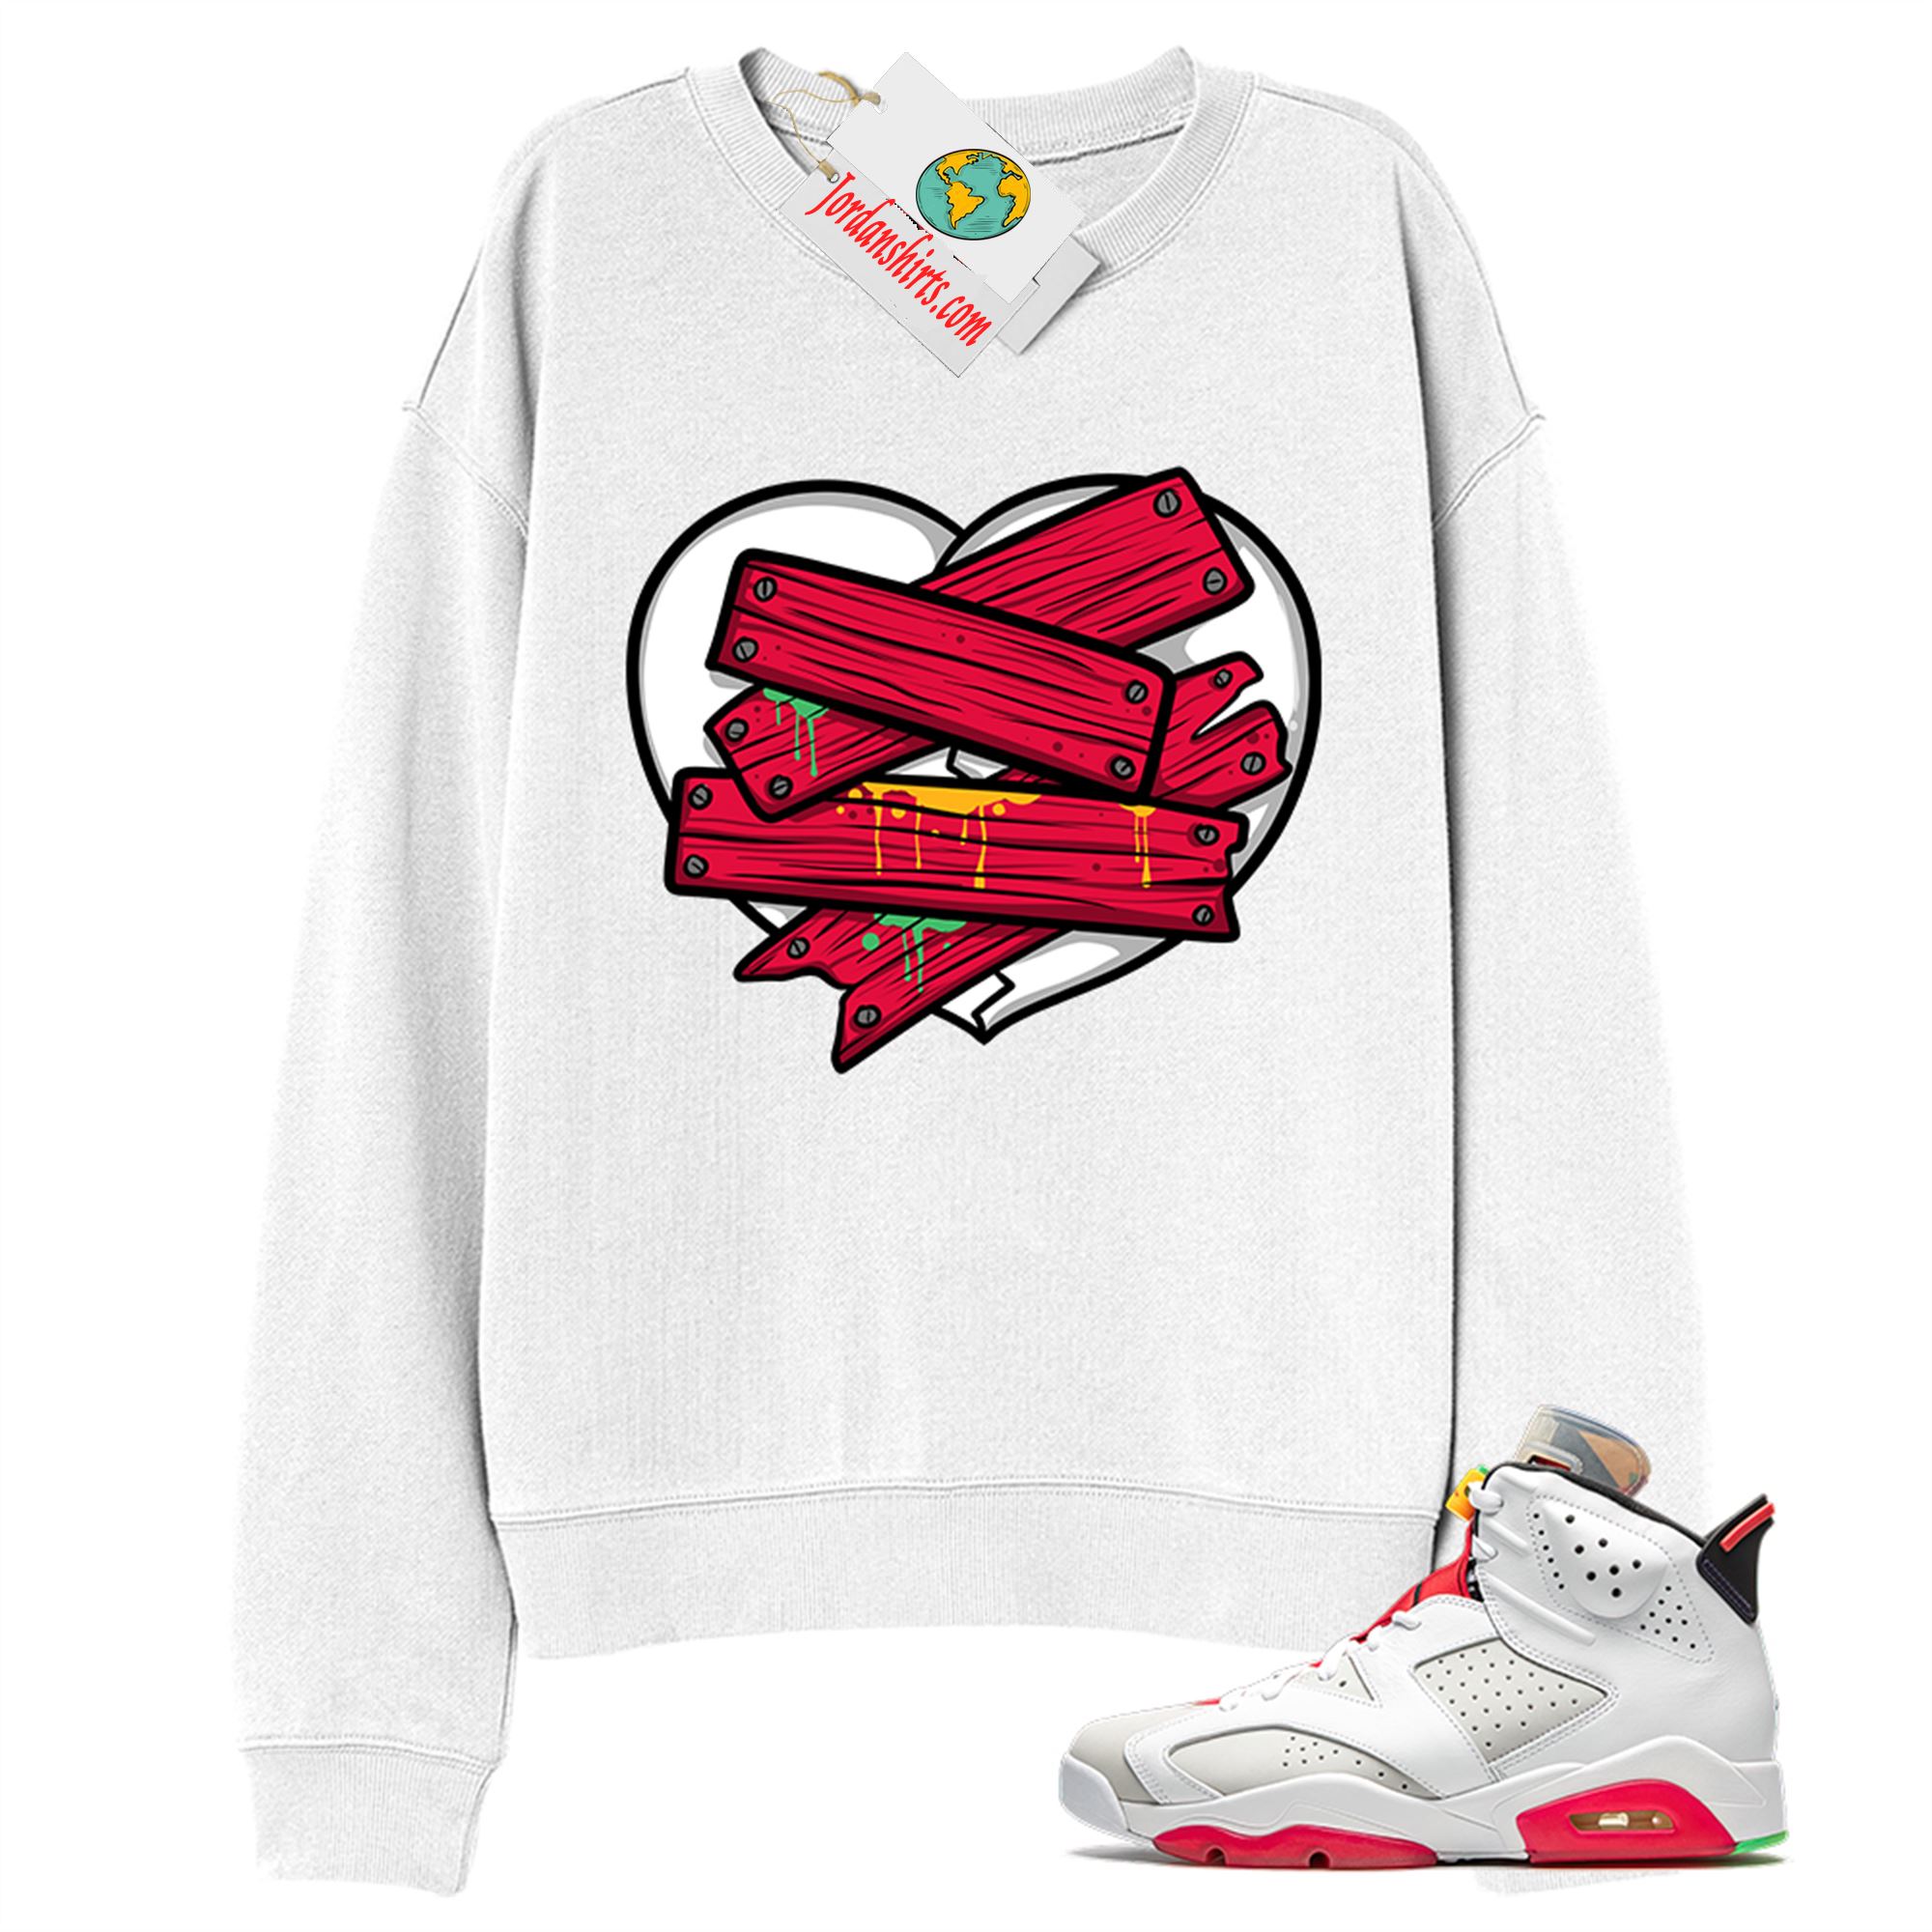 Jordan 6 Sweatshirt, Patch Love Broken Heart White Sweatshirt Air Jordan 6 Hare 6s Size Up To 5xl